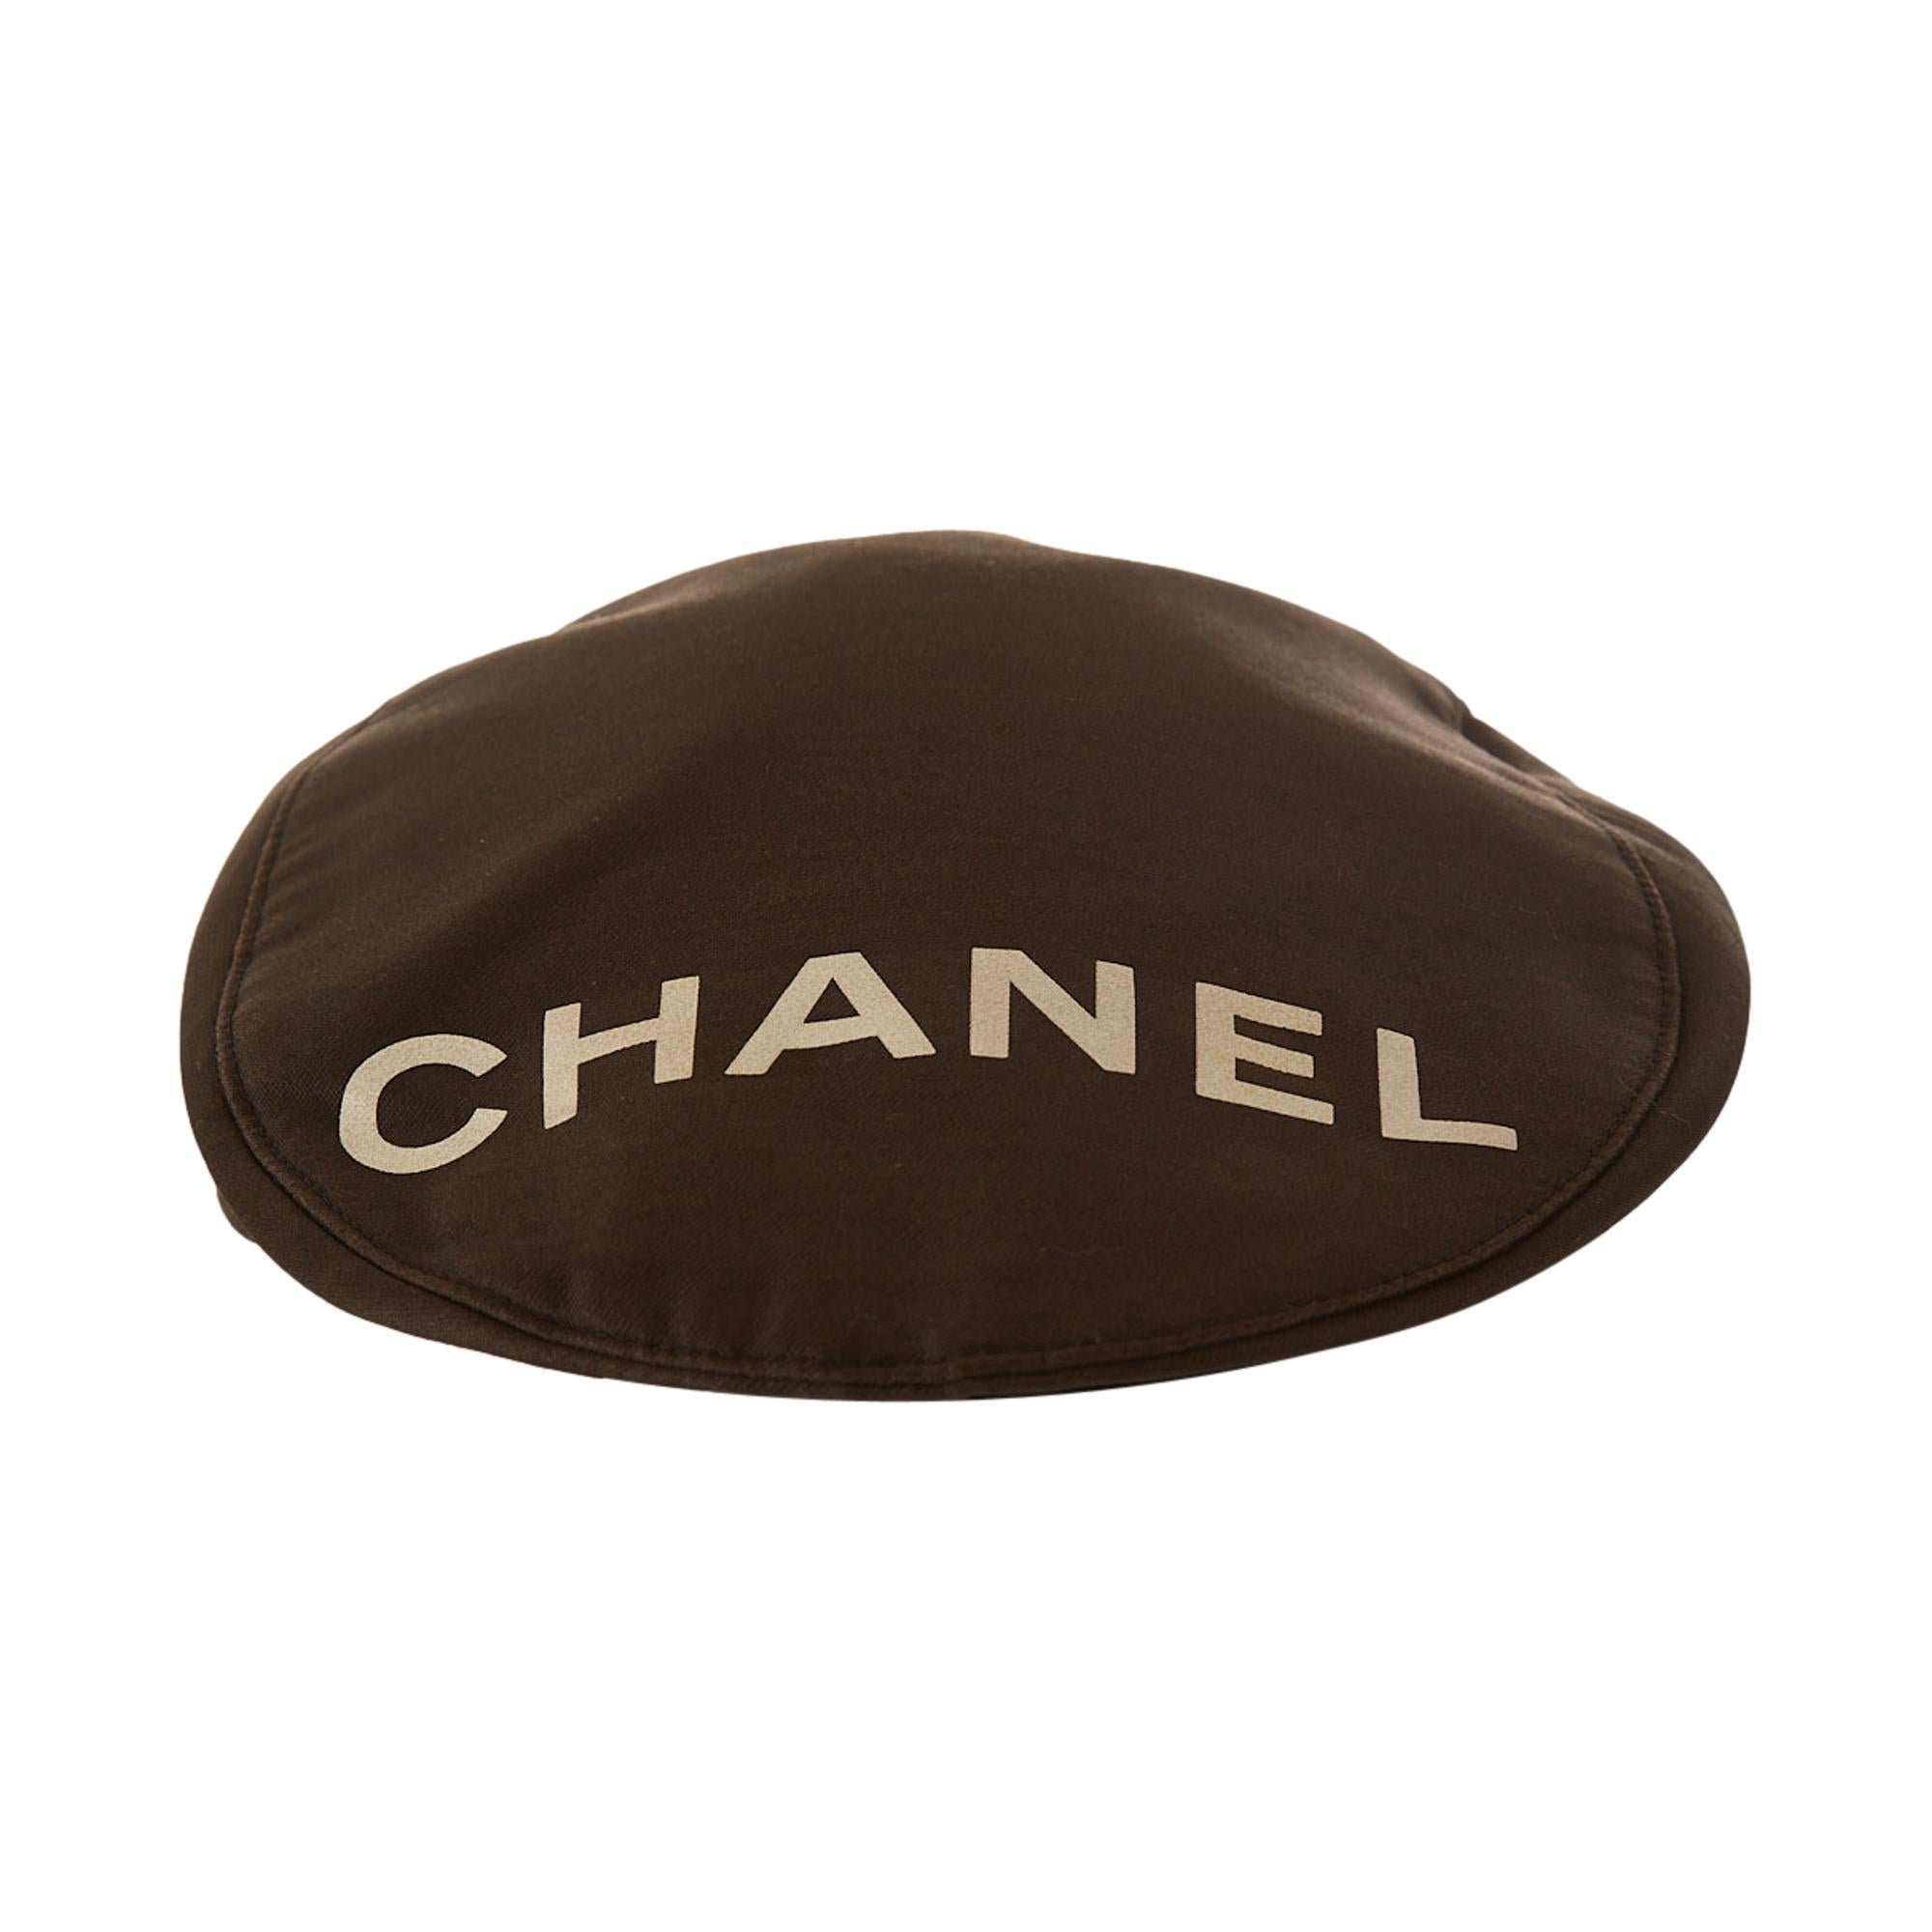 Chanel Black Logo Casket Cap